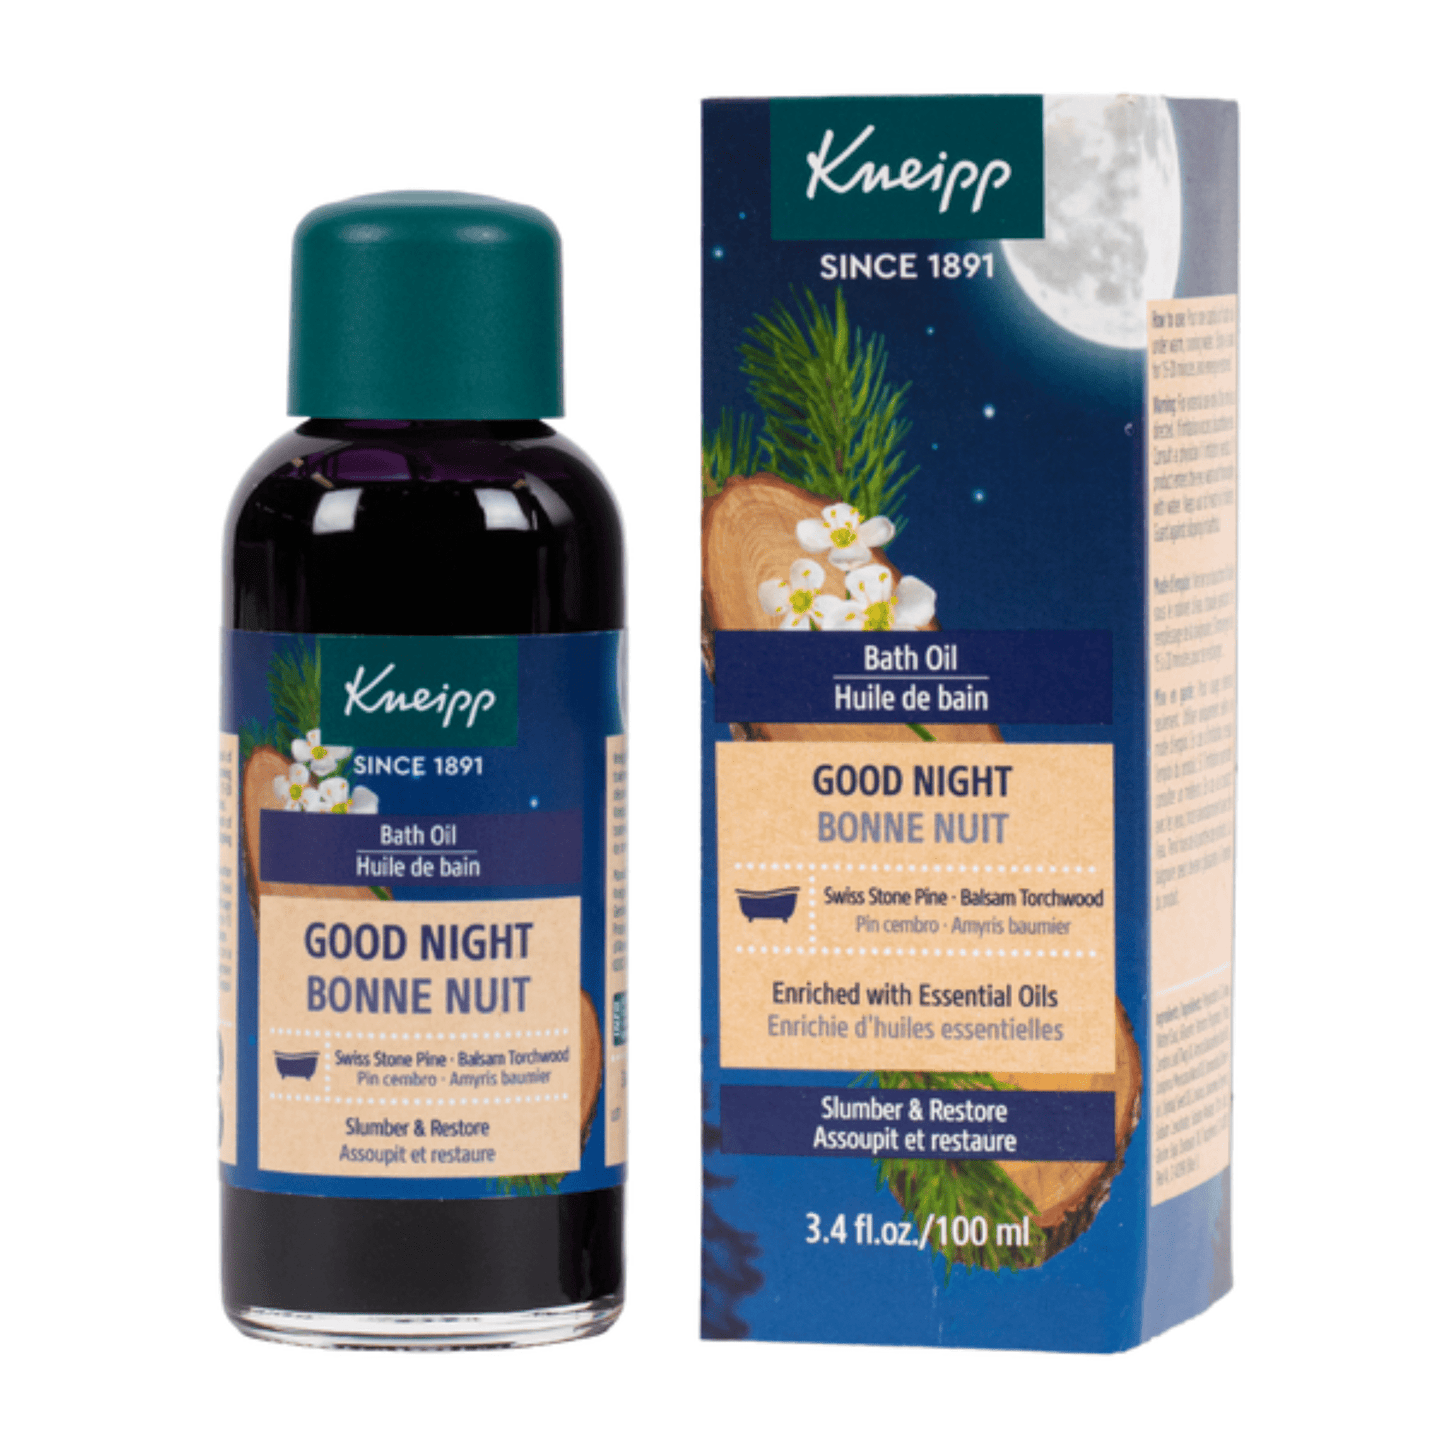 Primary Image of Good Night Bath Oil